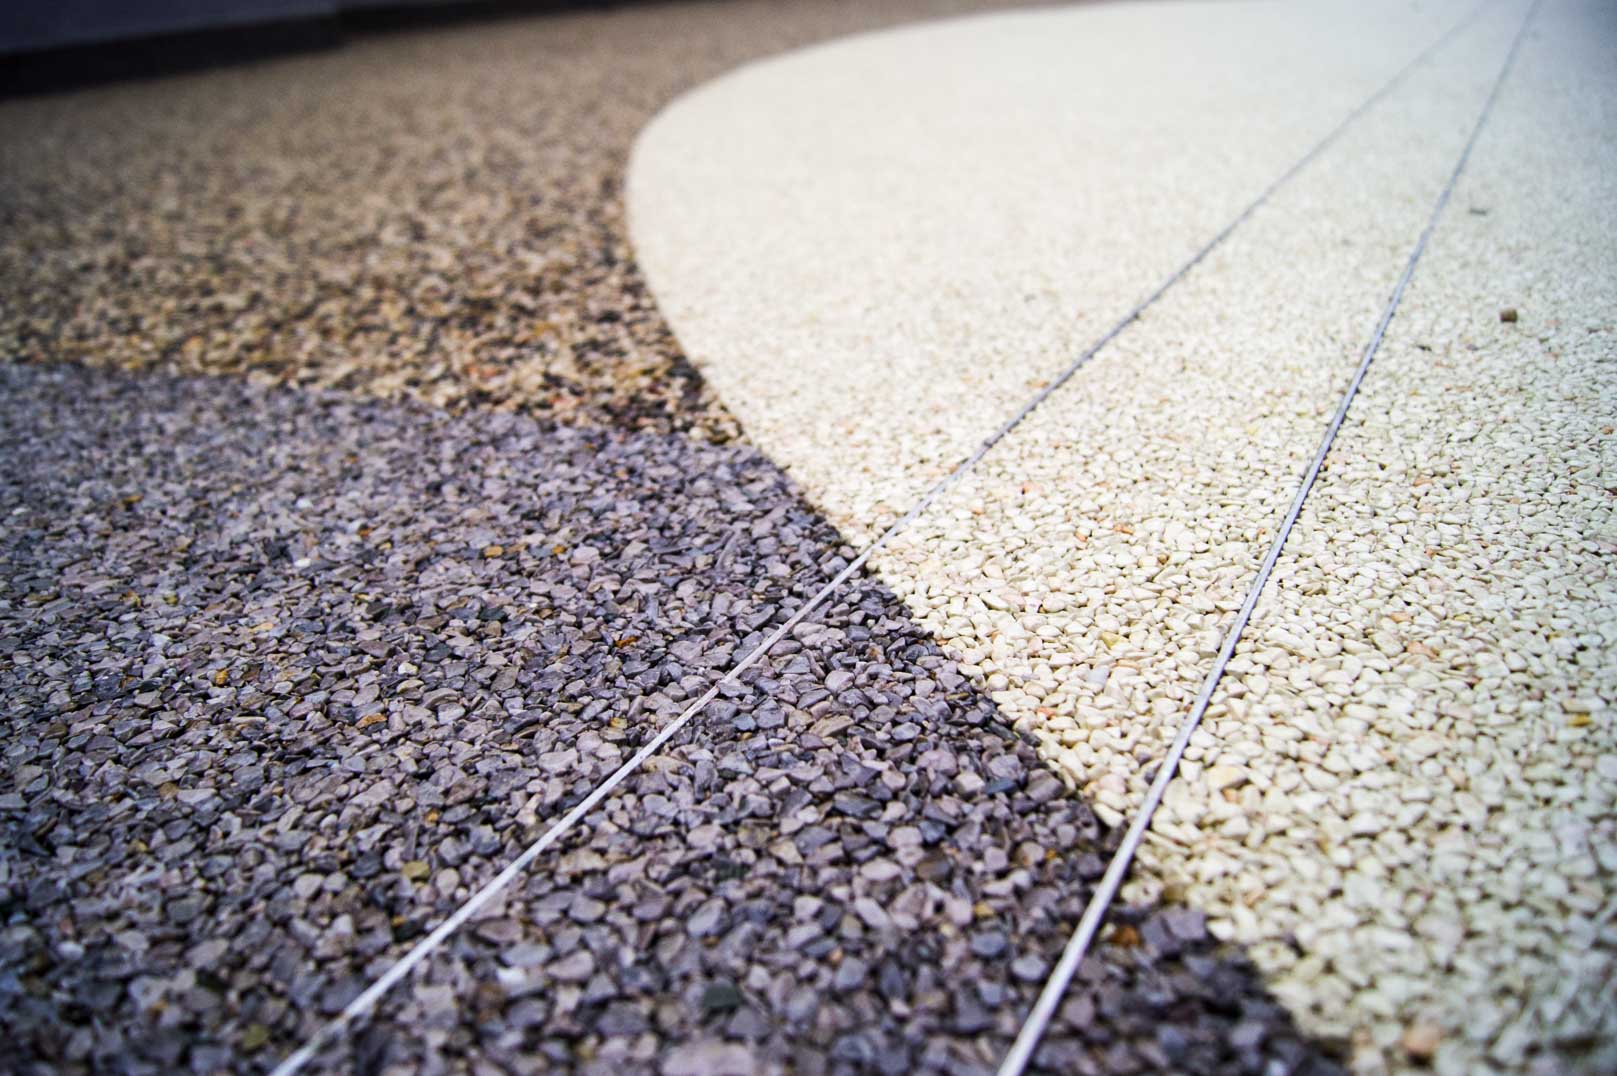 viarustik natural stone carpet detail